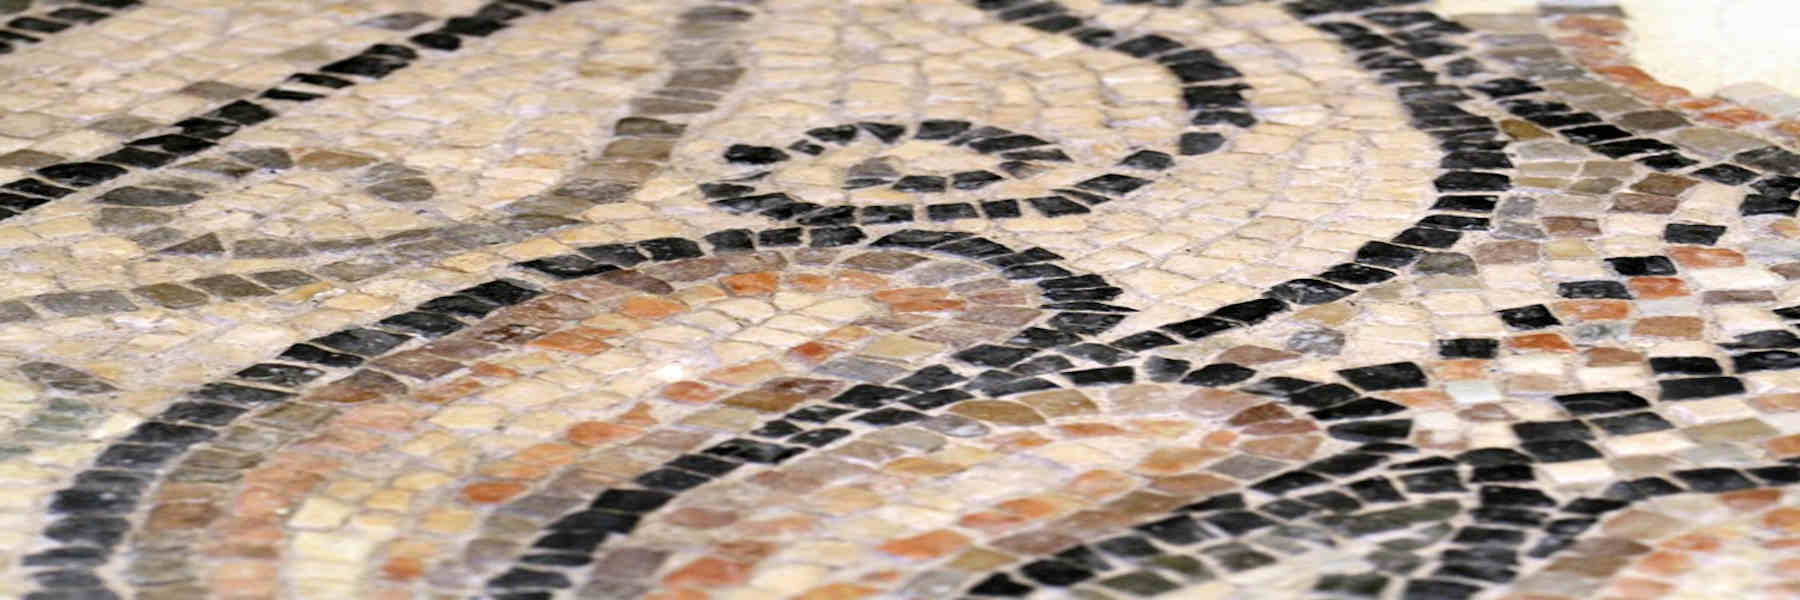 Exhibition of St Martin's  prope litus maris Mosaics